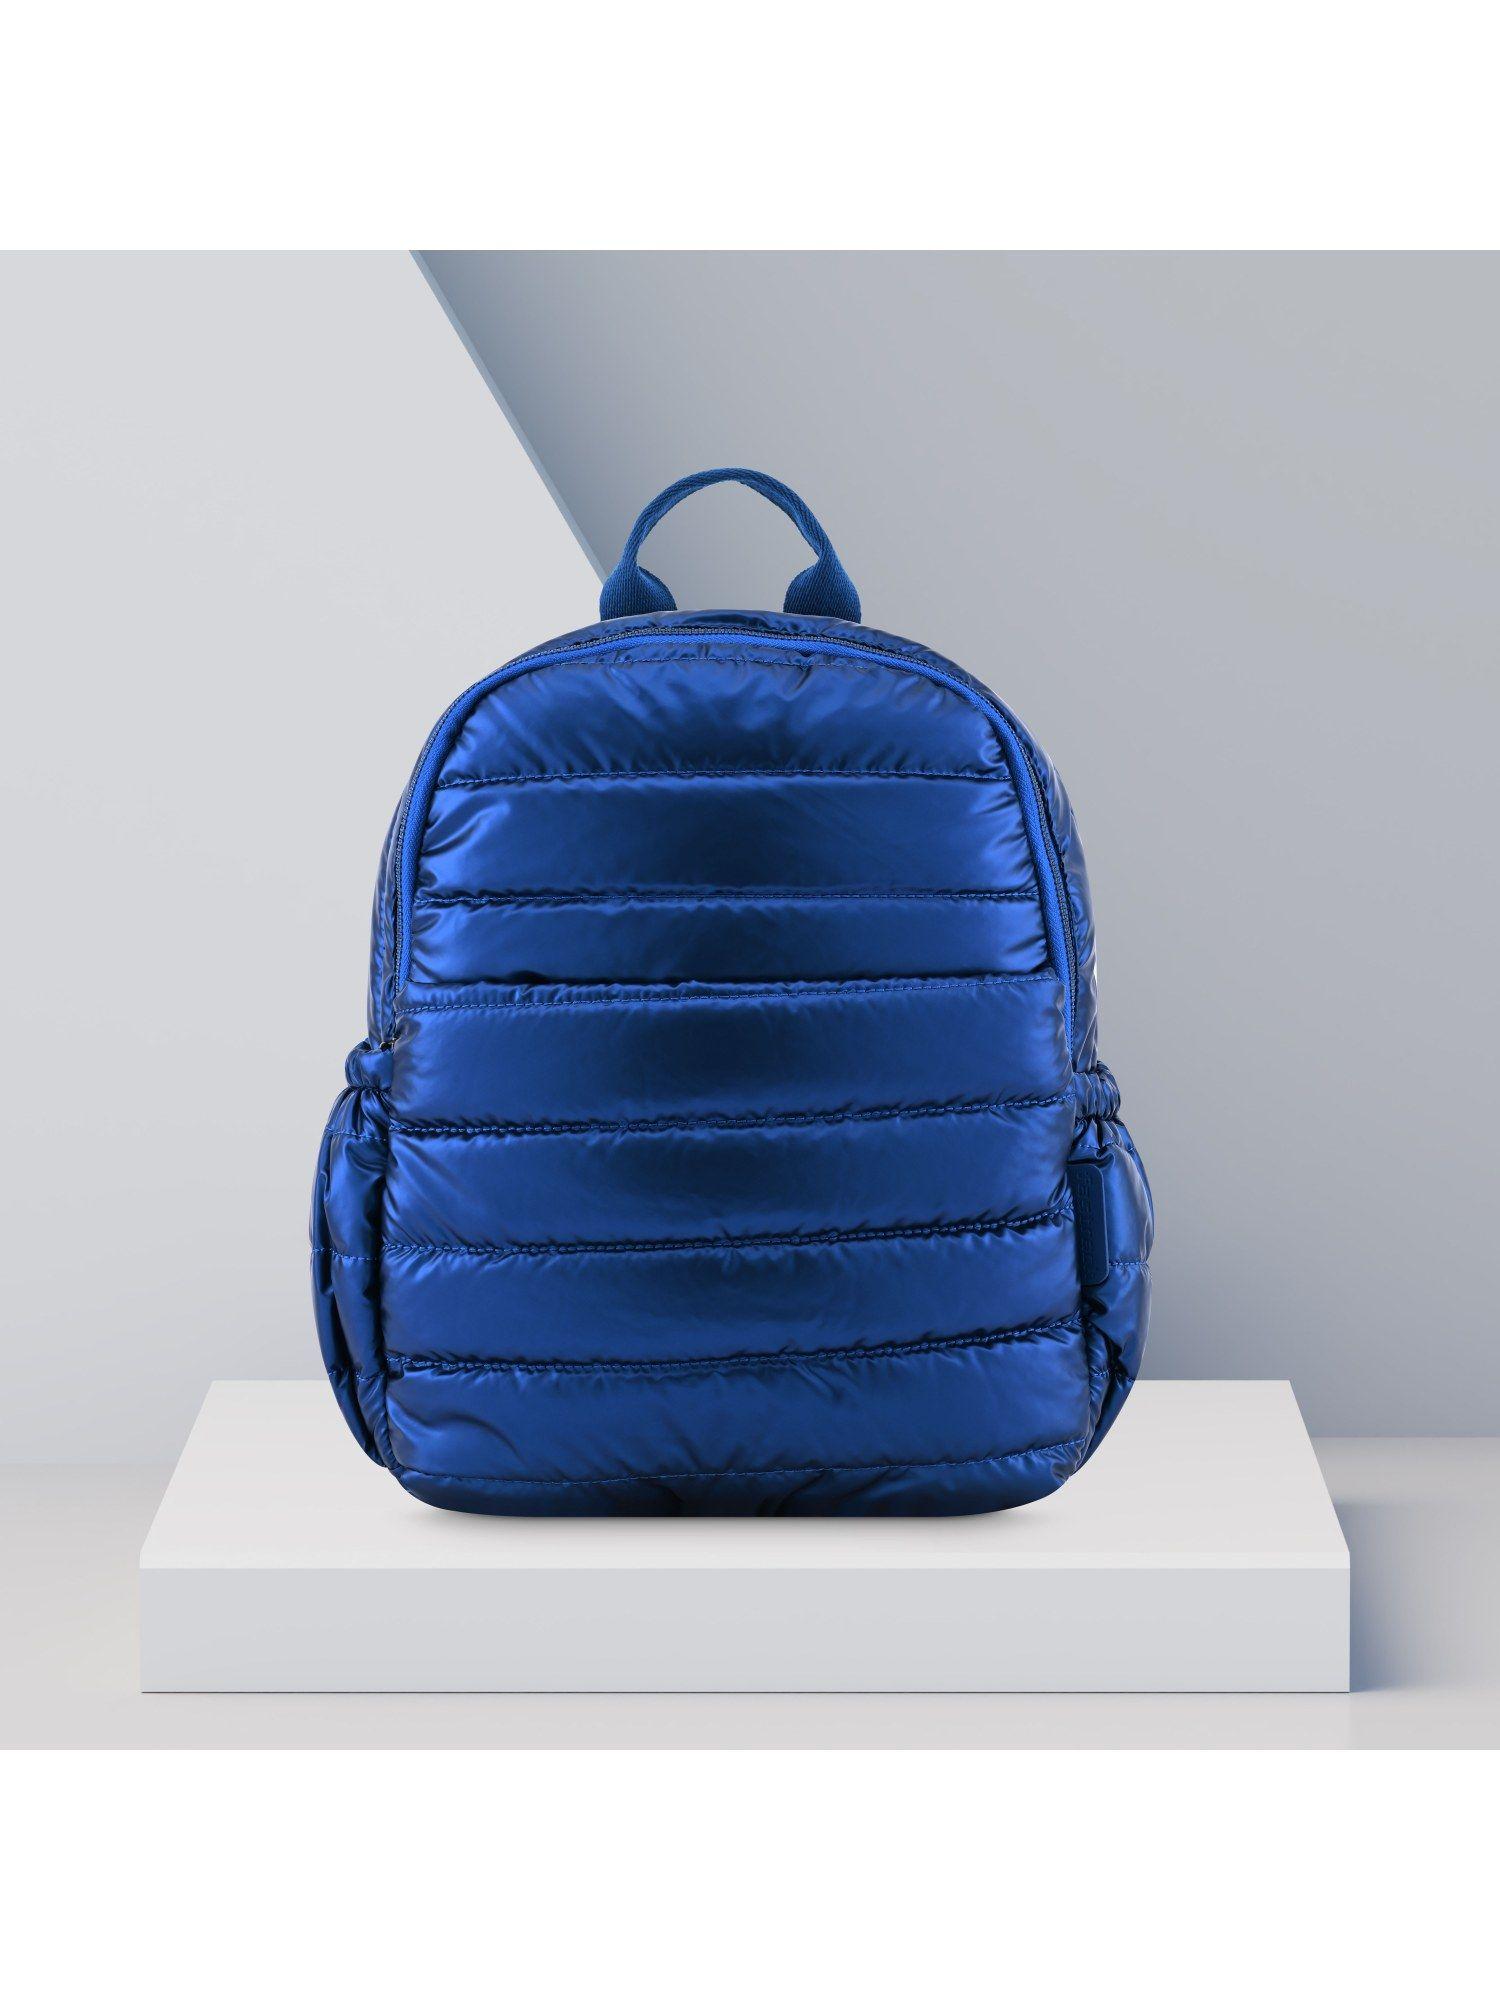 cobalt blue college backpack for women